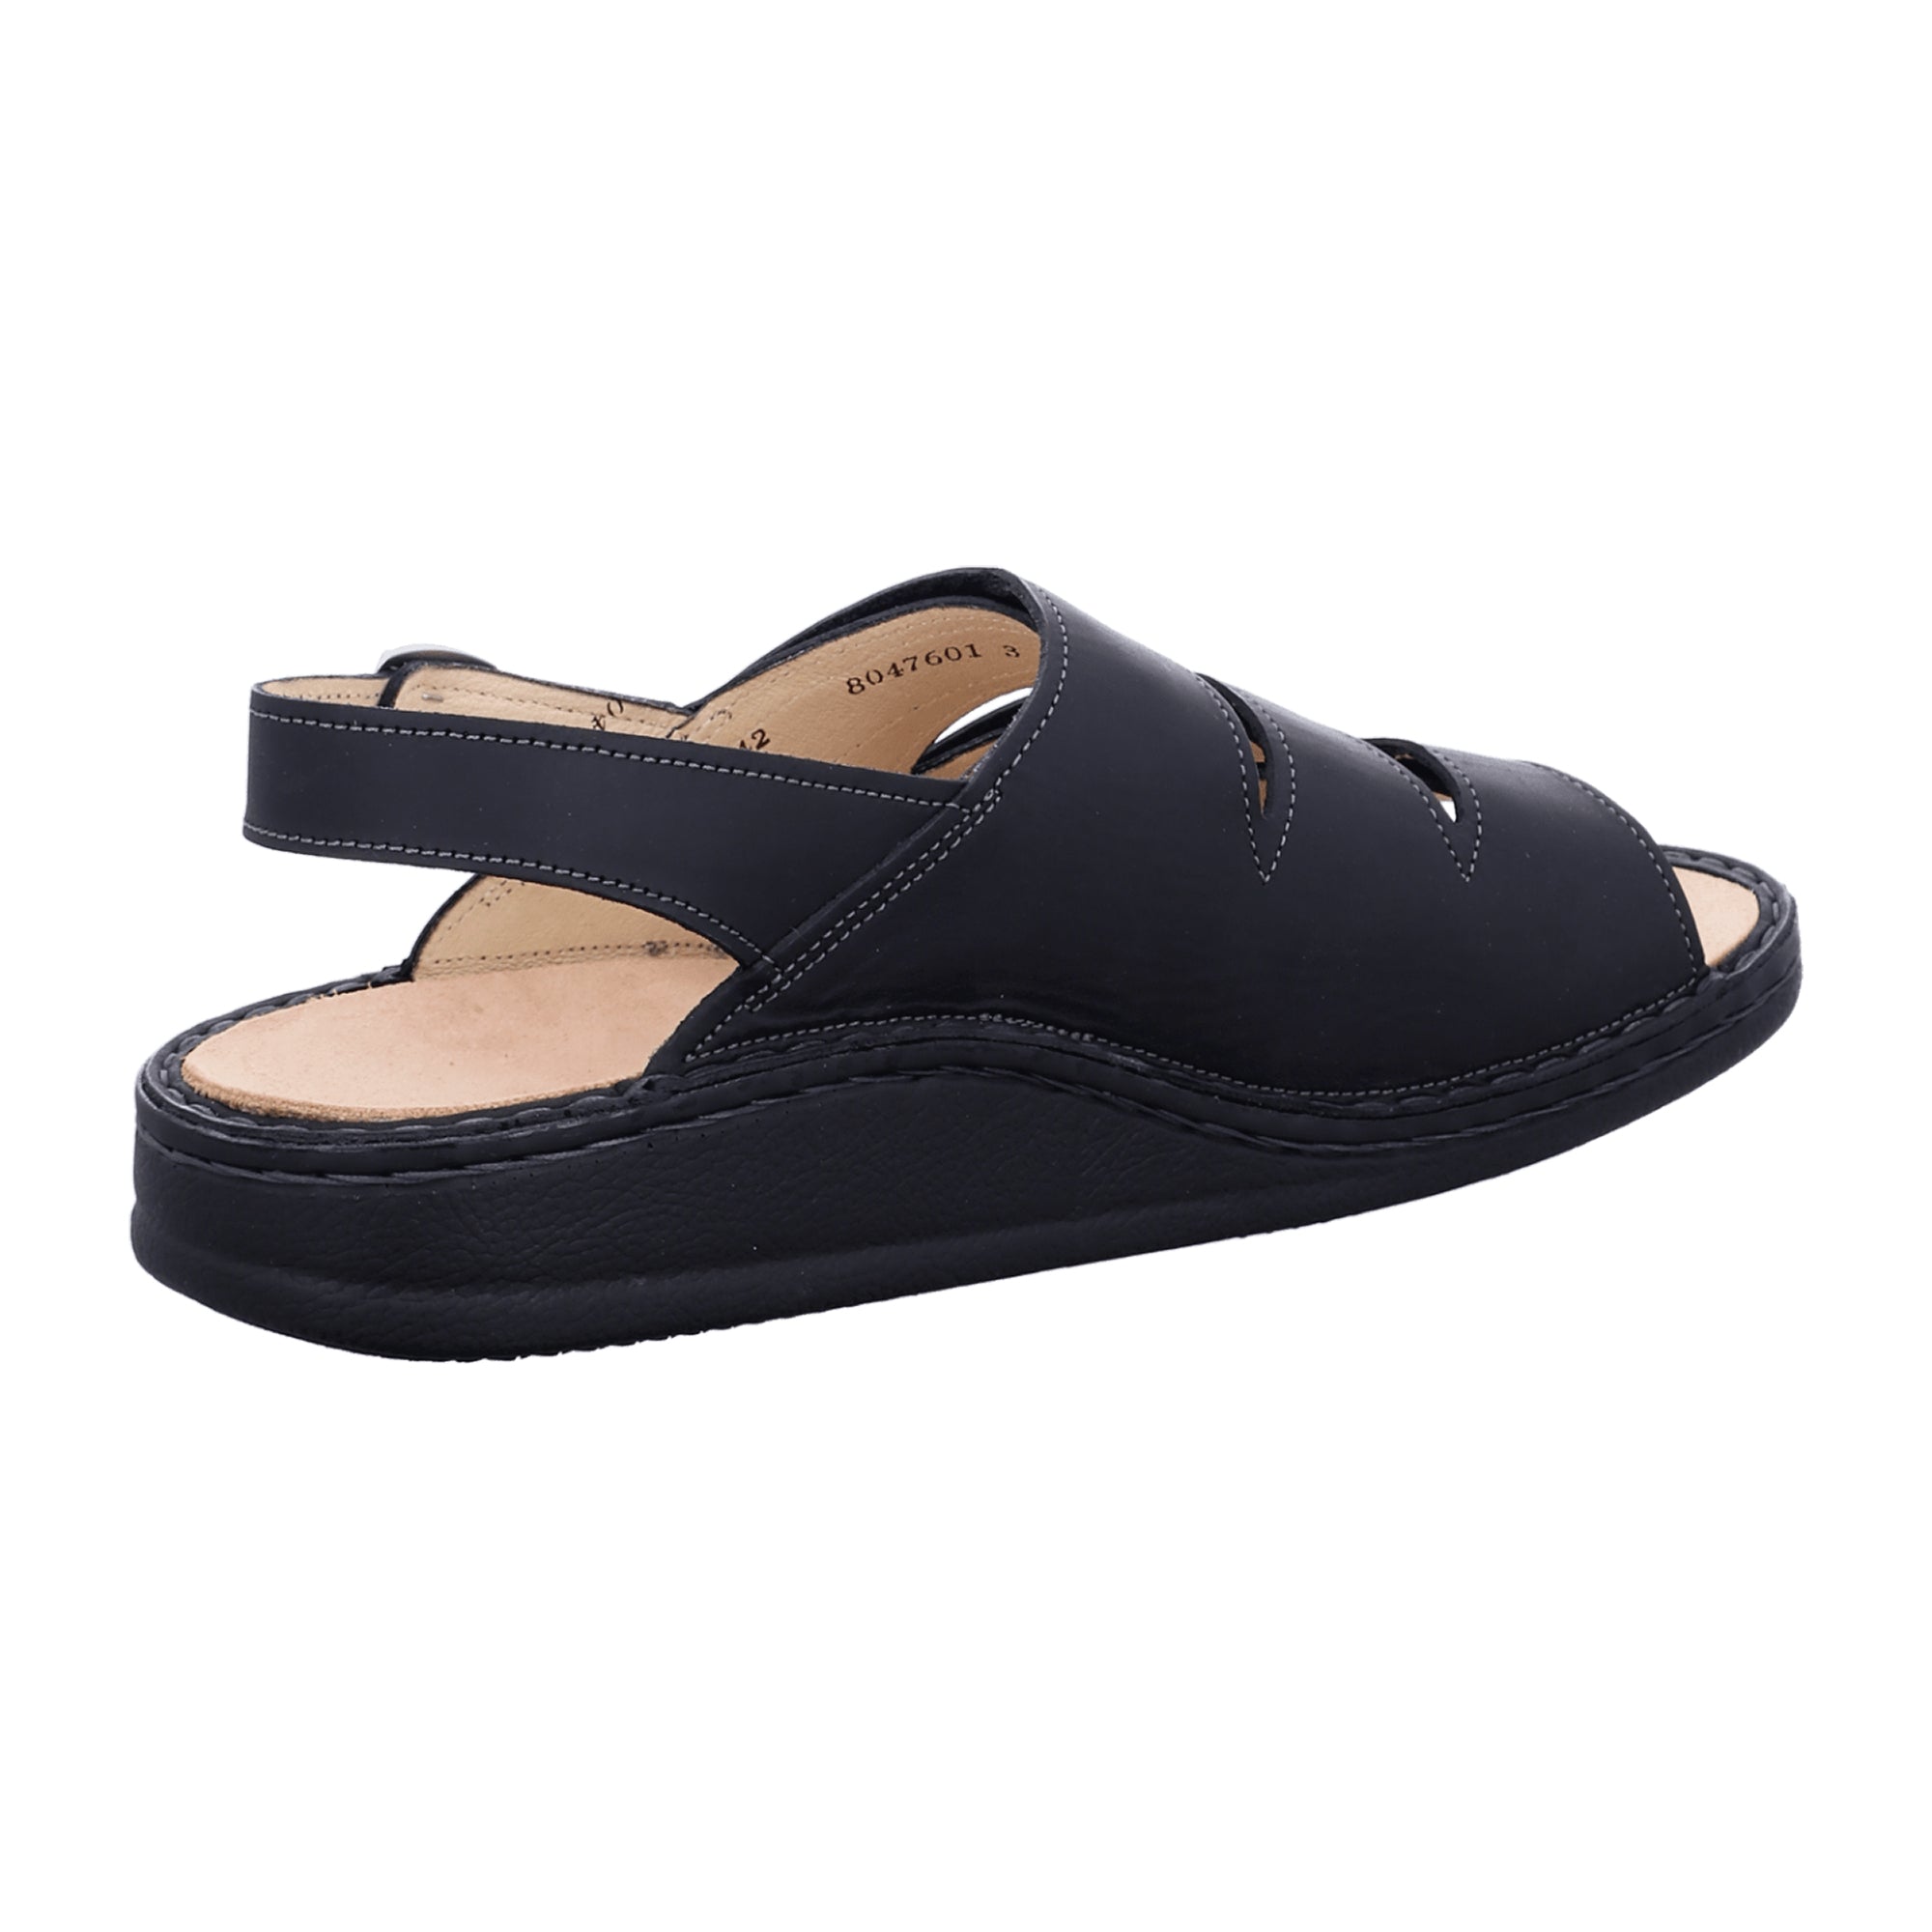 Finn Comfort Sylt Men's Sandals - Comfortable Leather Sandals in Black with Adjustable Straps